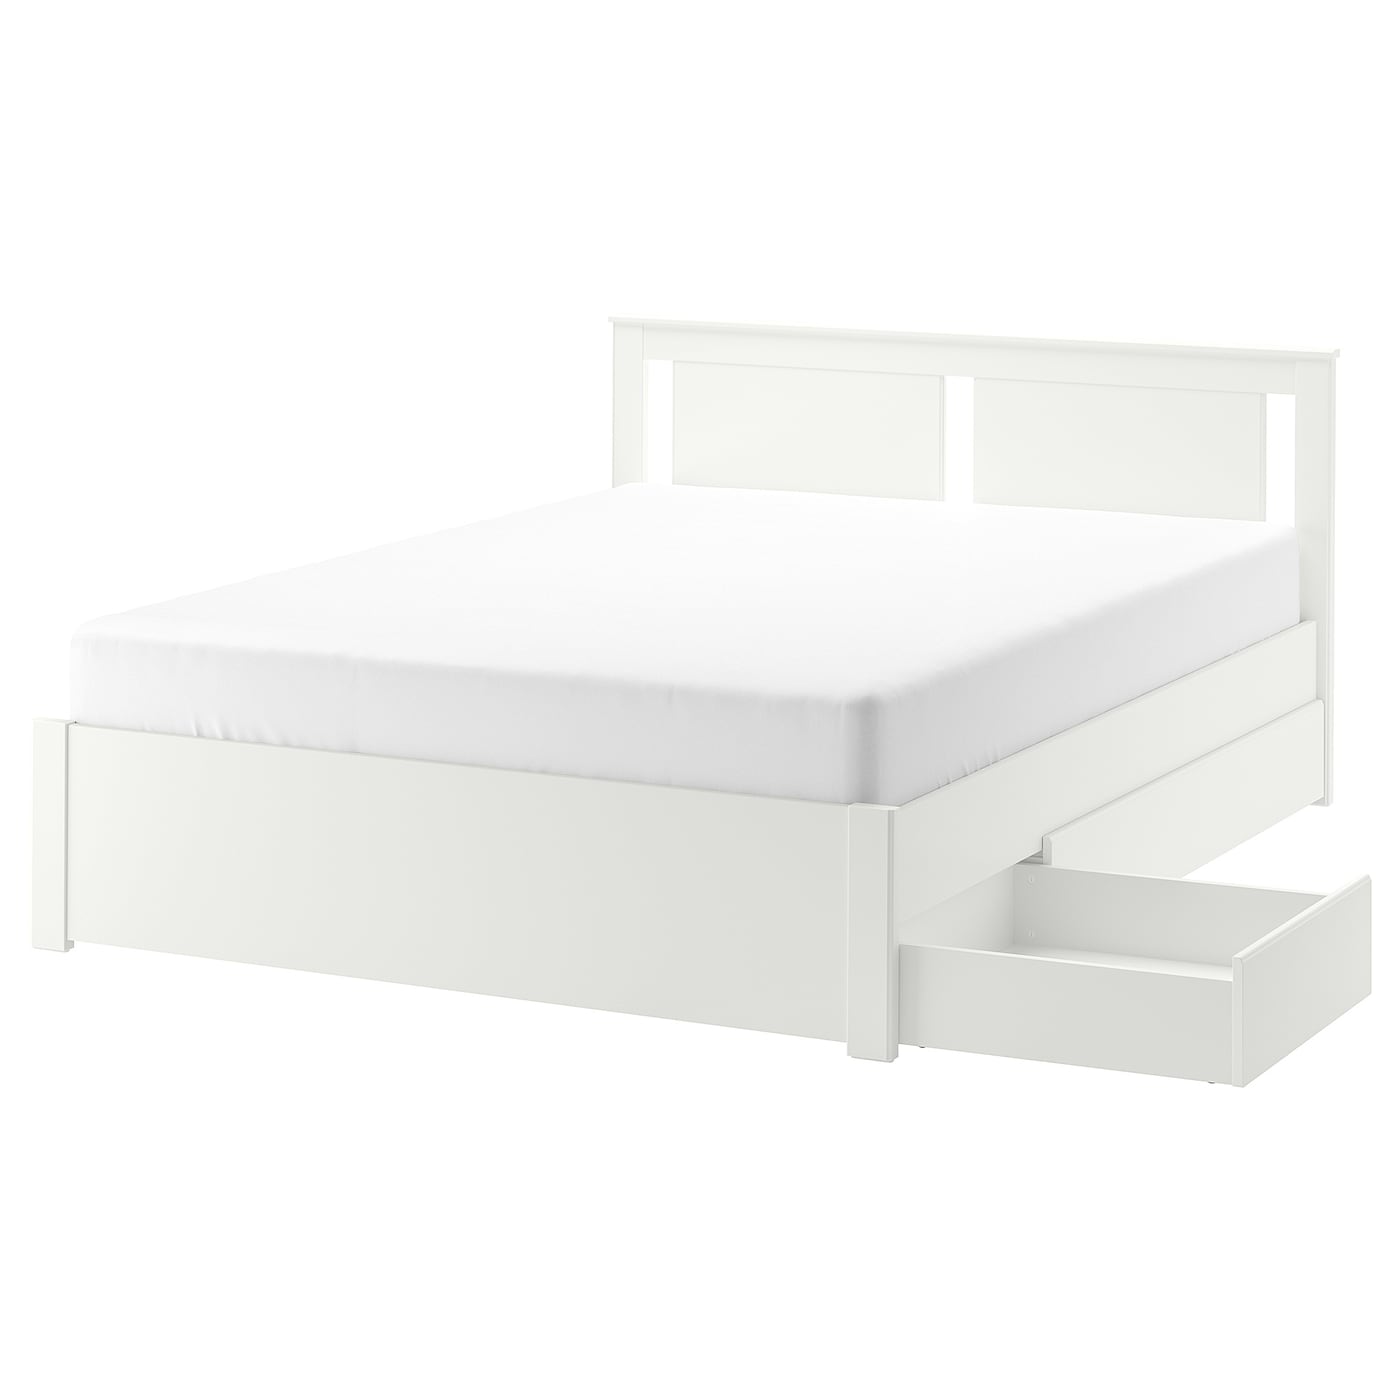 Каркас кровати с 4 ящиками для хранения - IKEA SONGESAND/LÖNSET/LONSET, 200х140 см, белый, СОНГЕСАНД/ЛОНСЕТ ИКЕА